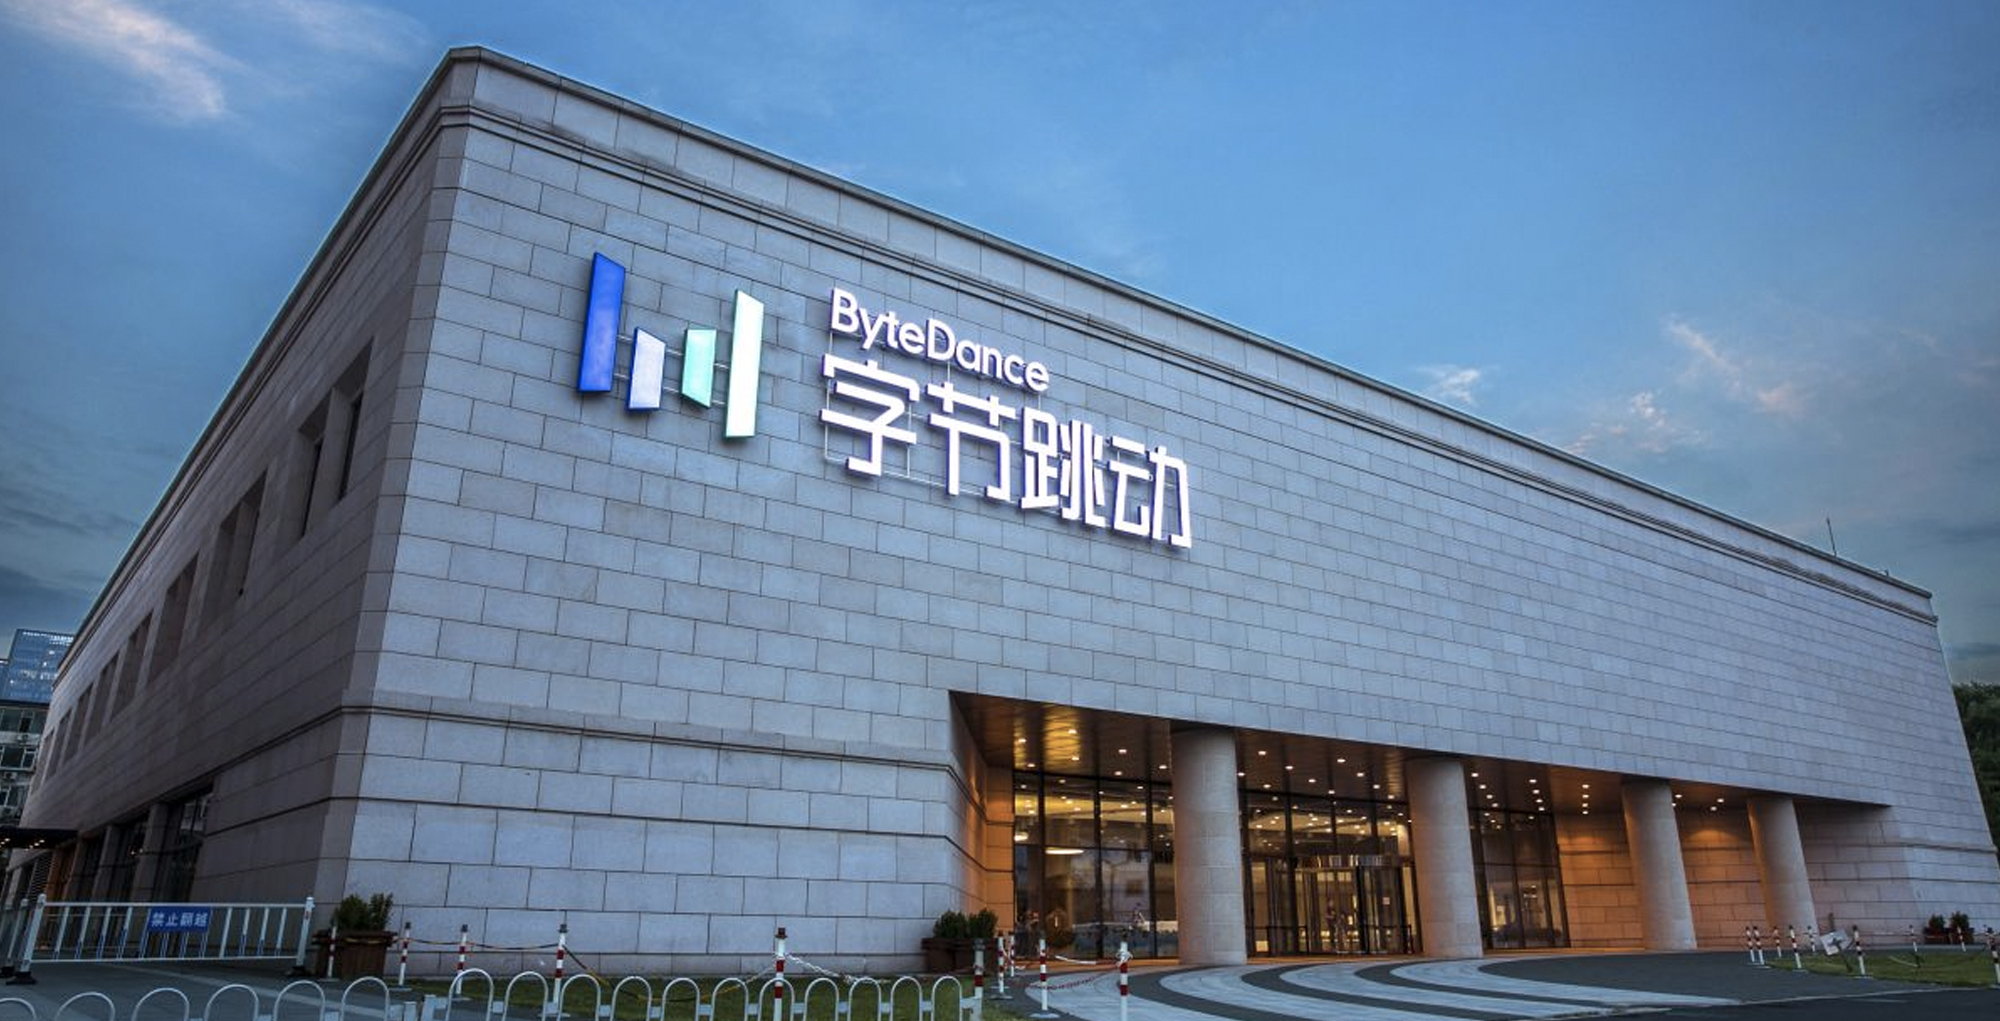 ByteDance, the company behind TikTok, looks to $180 billion valuation